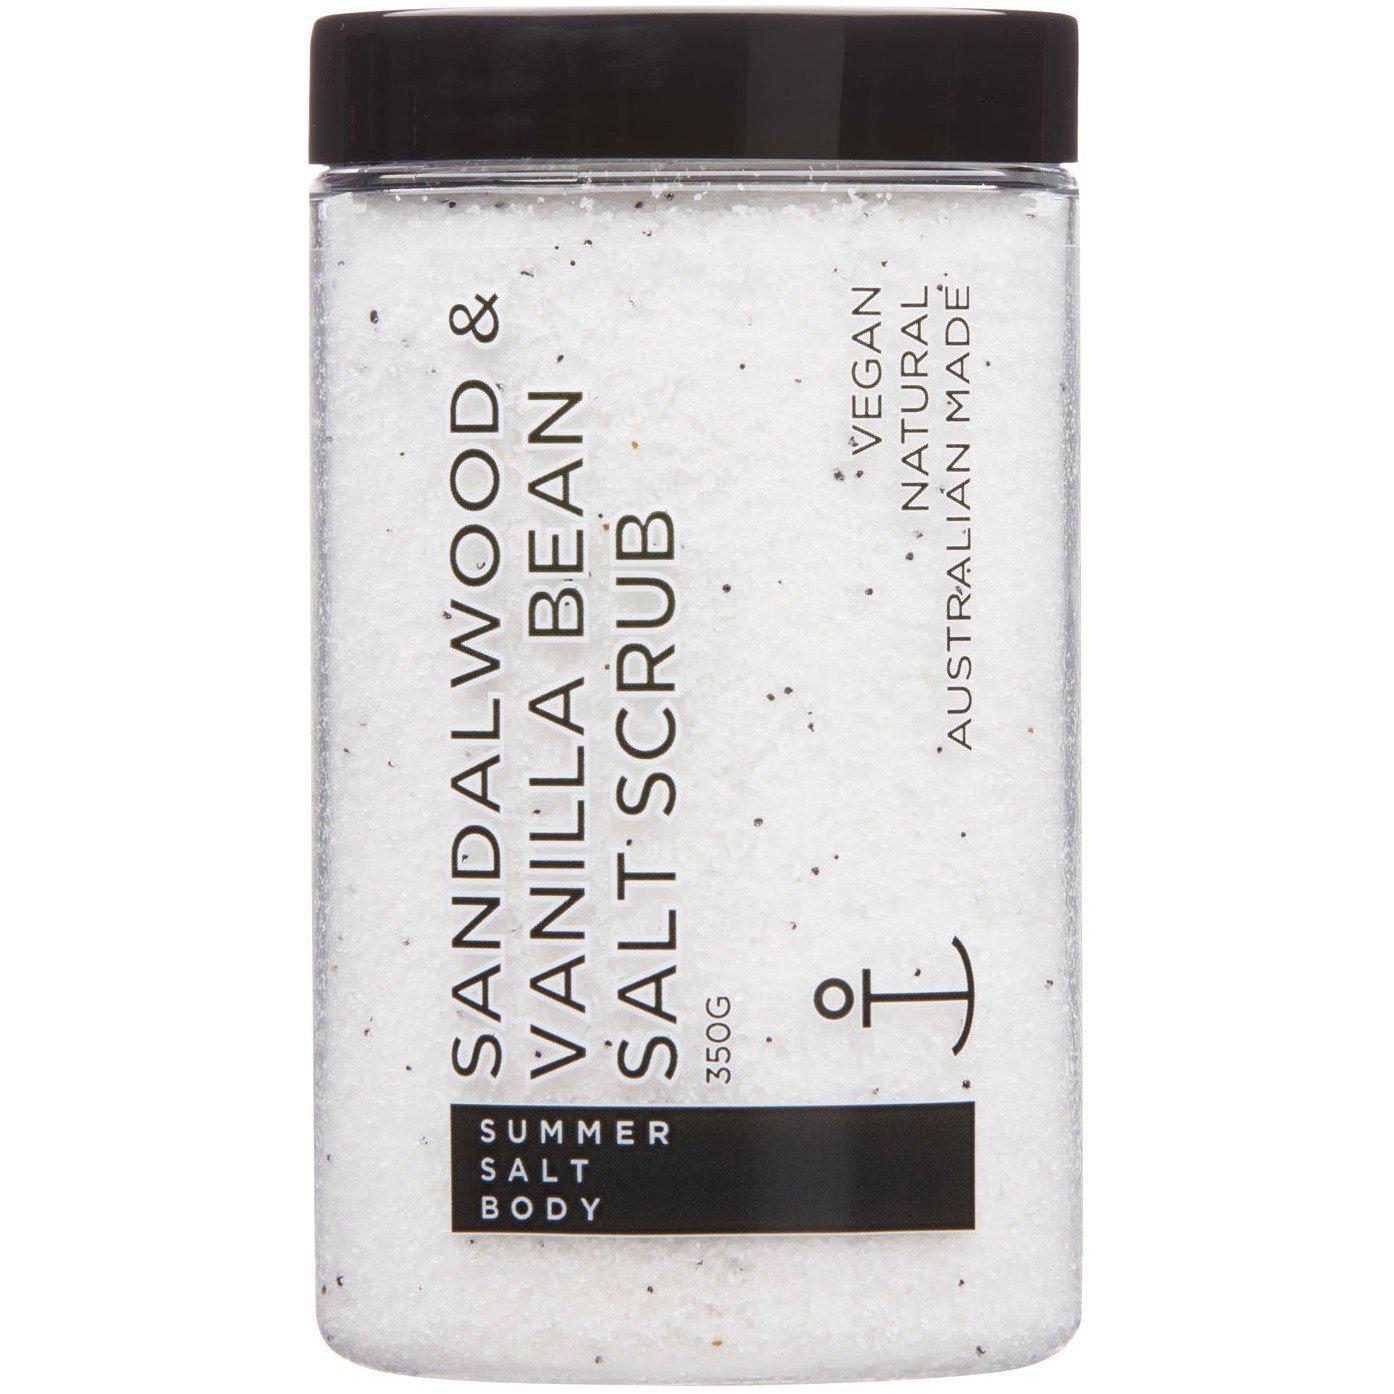 Sandalwood & Vanilla Bean Salt Scrub - 350g Tub-Beauty & Well-Being-Summer Salt Body-The Bay Room